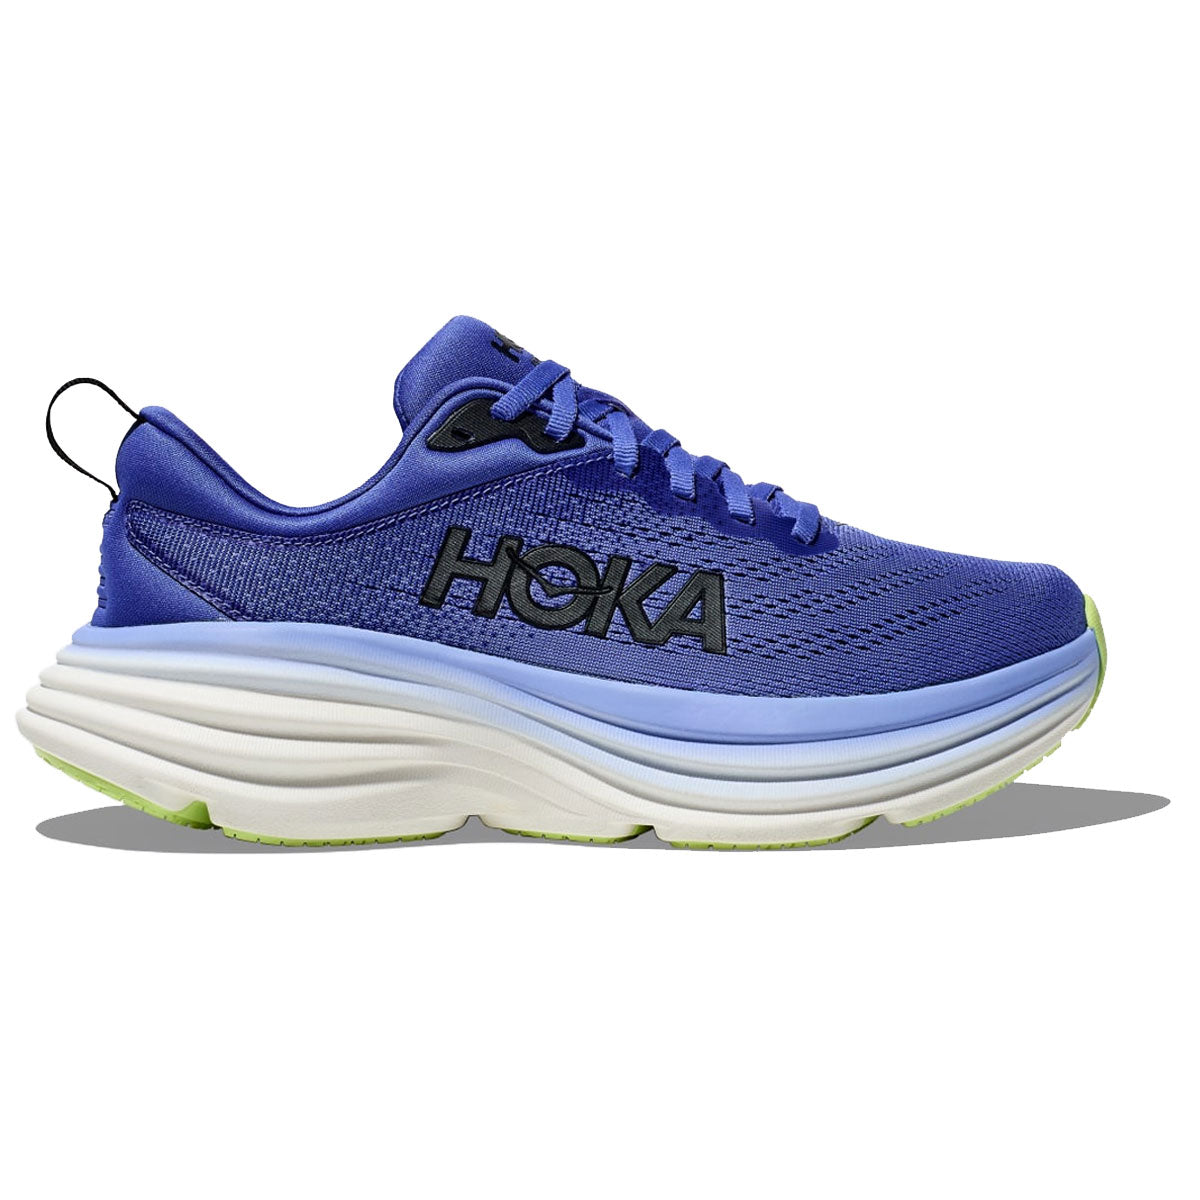 Hoka One One Bondi 8 Running Shoes - Womens - Stellar Blue/Cosmos